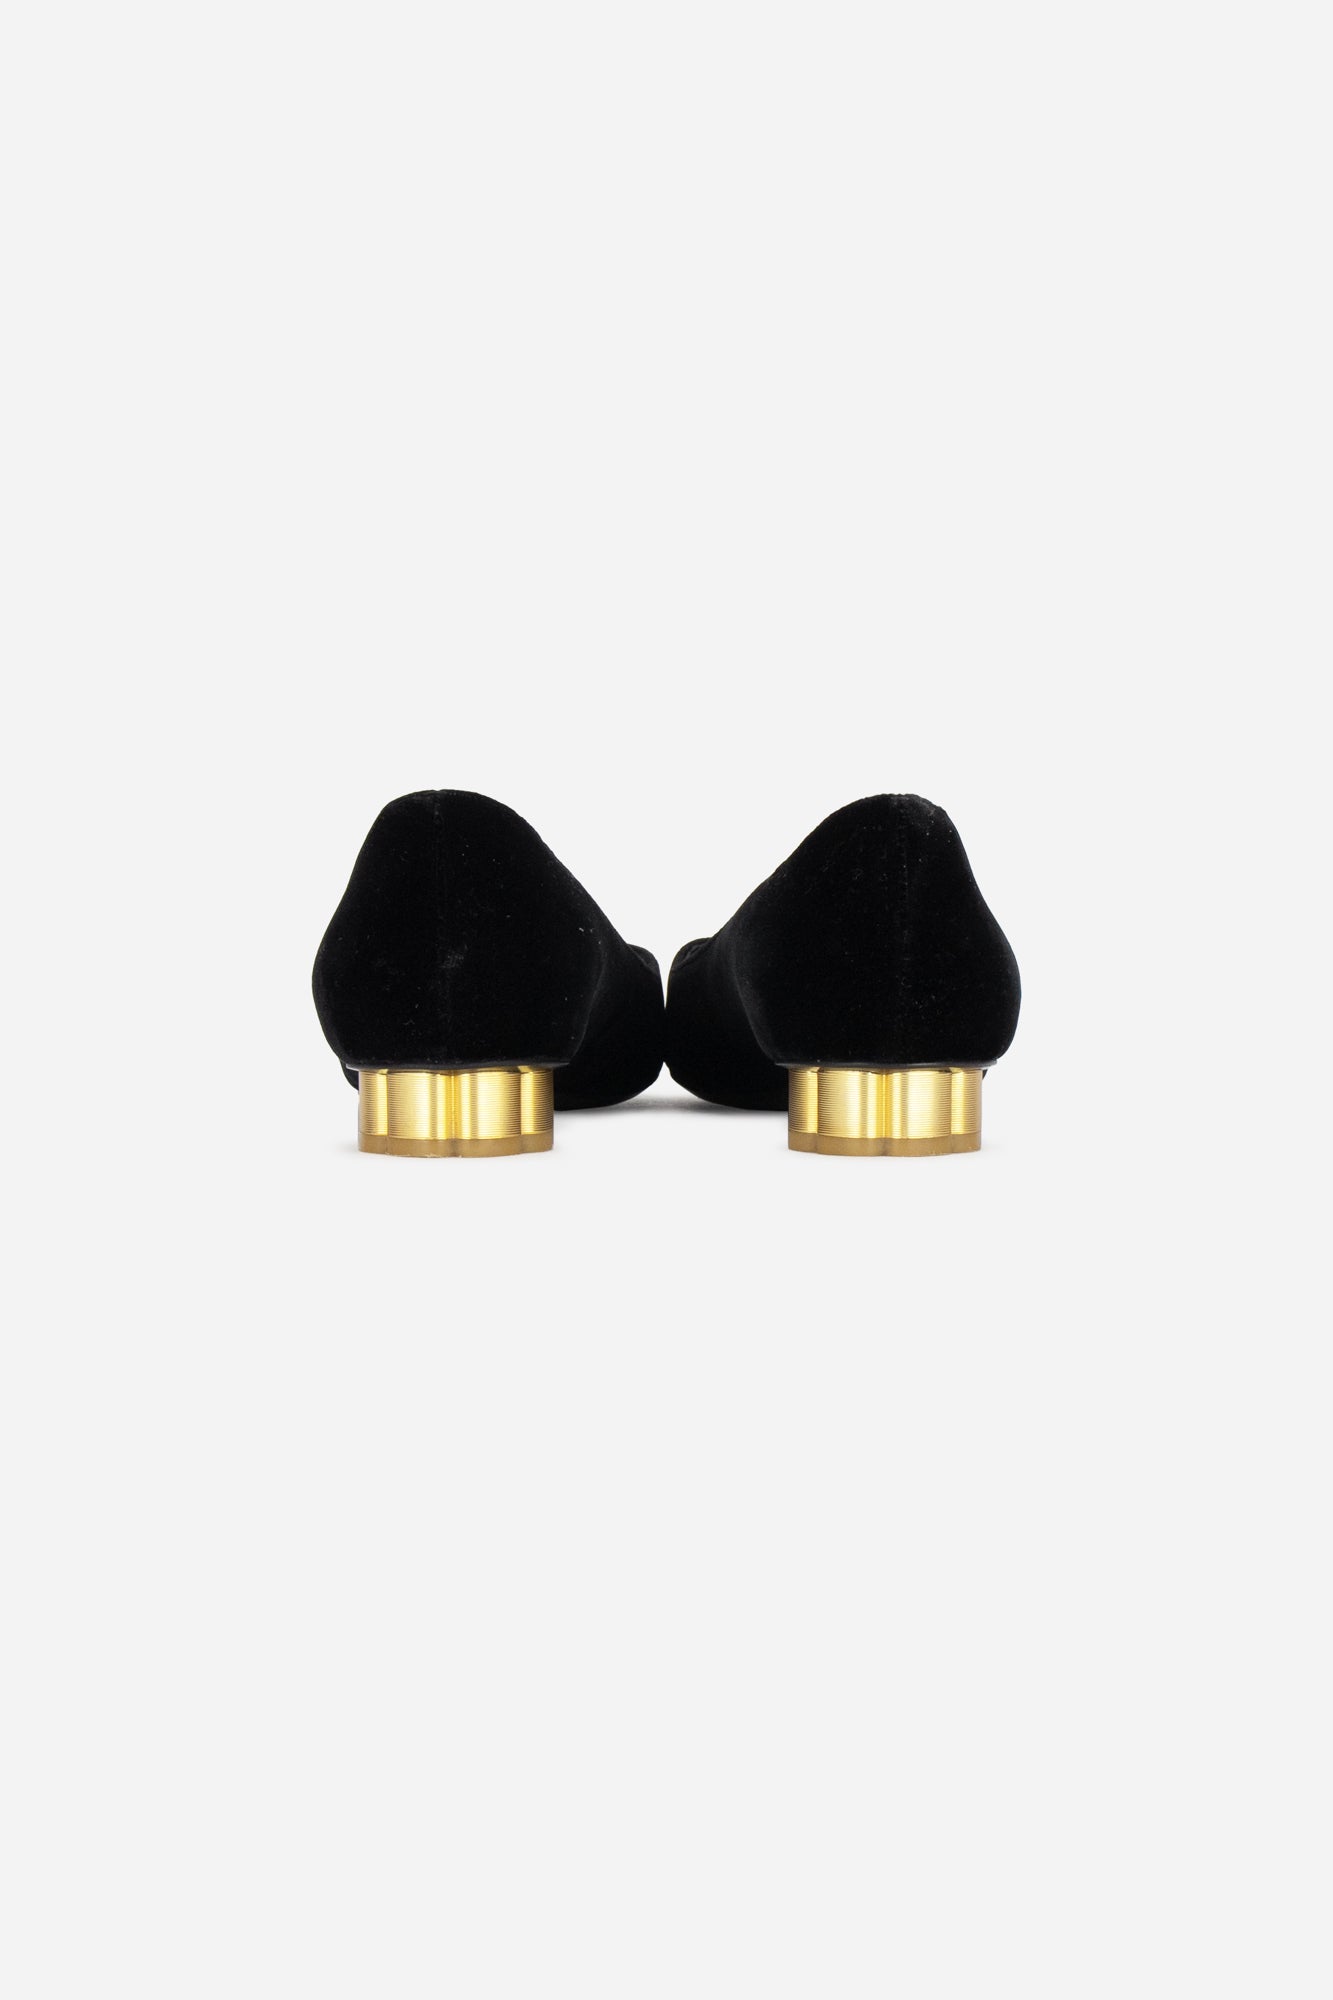 Black Velvet pointed toe flat with flower heel detail black suede, gold heel